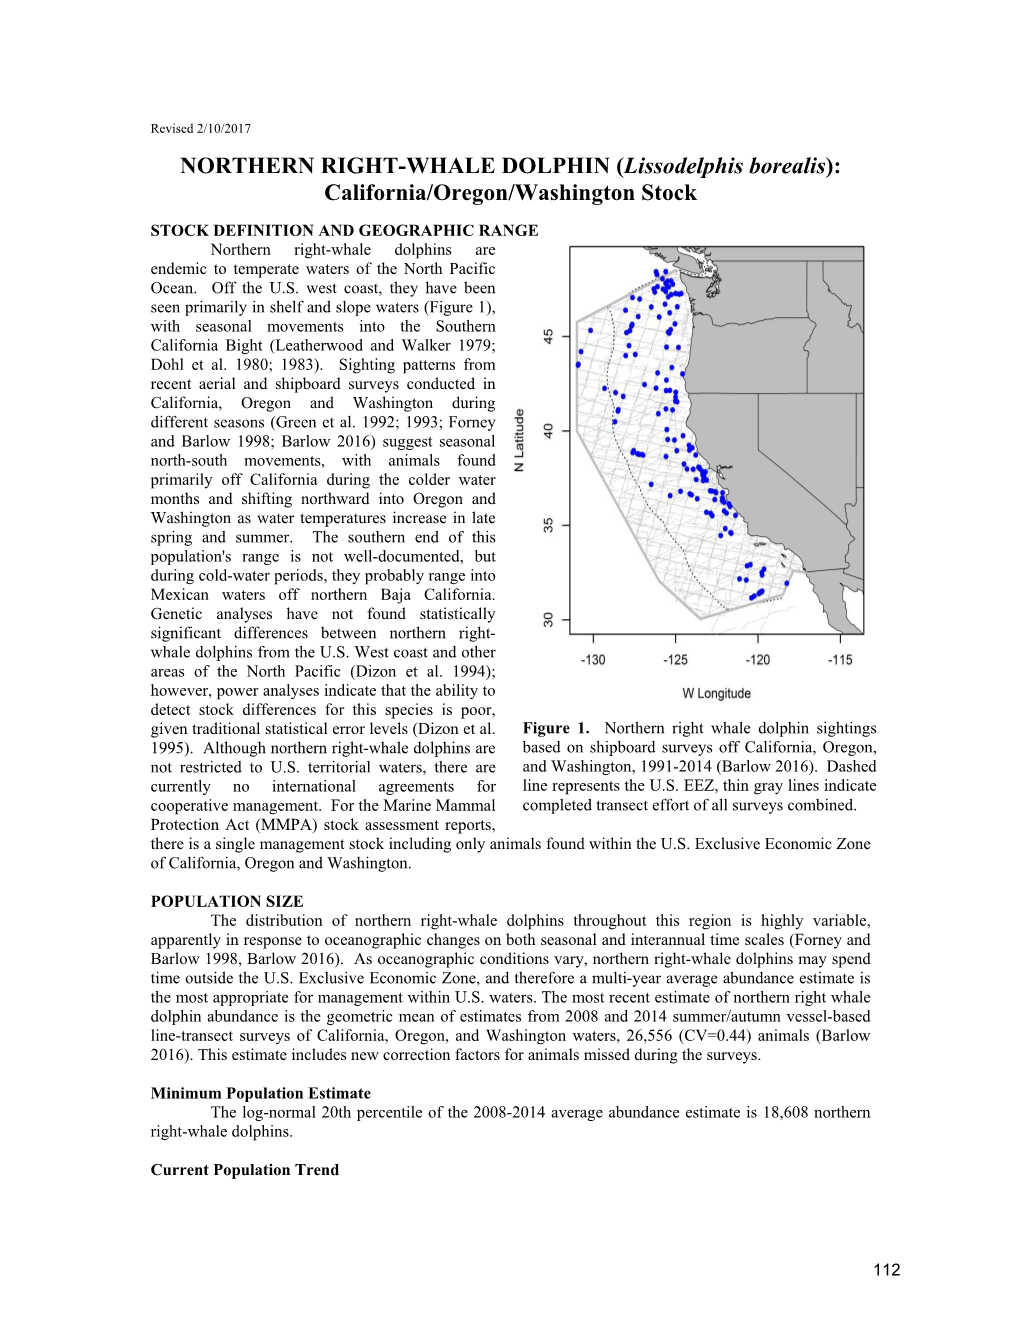 NORTHERN RIGHT-WHALE DOLPHIN (Lissodelphis Borealis): California/Oregon/Washington Stock